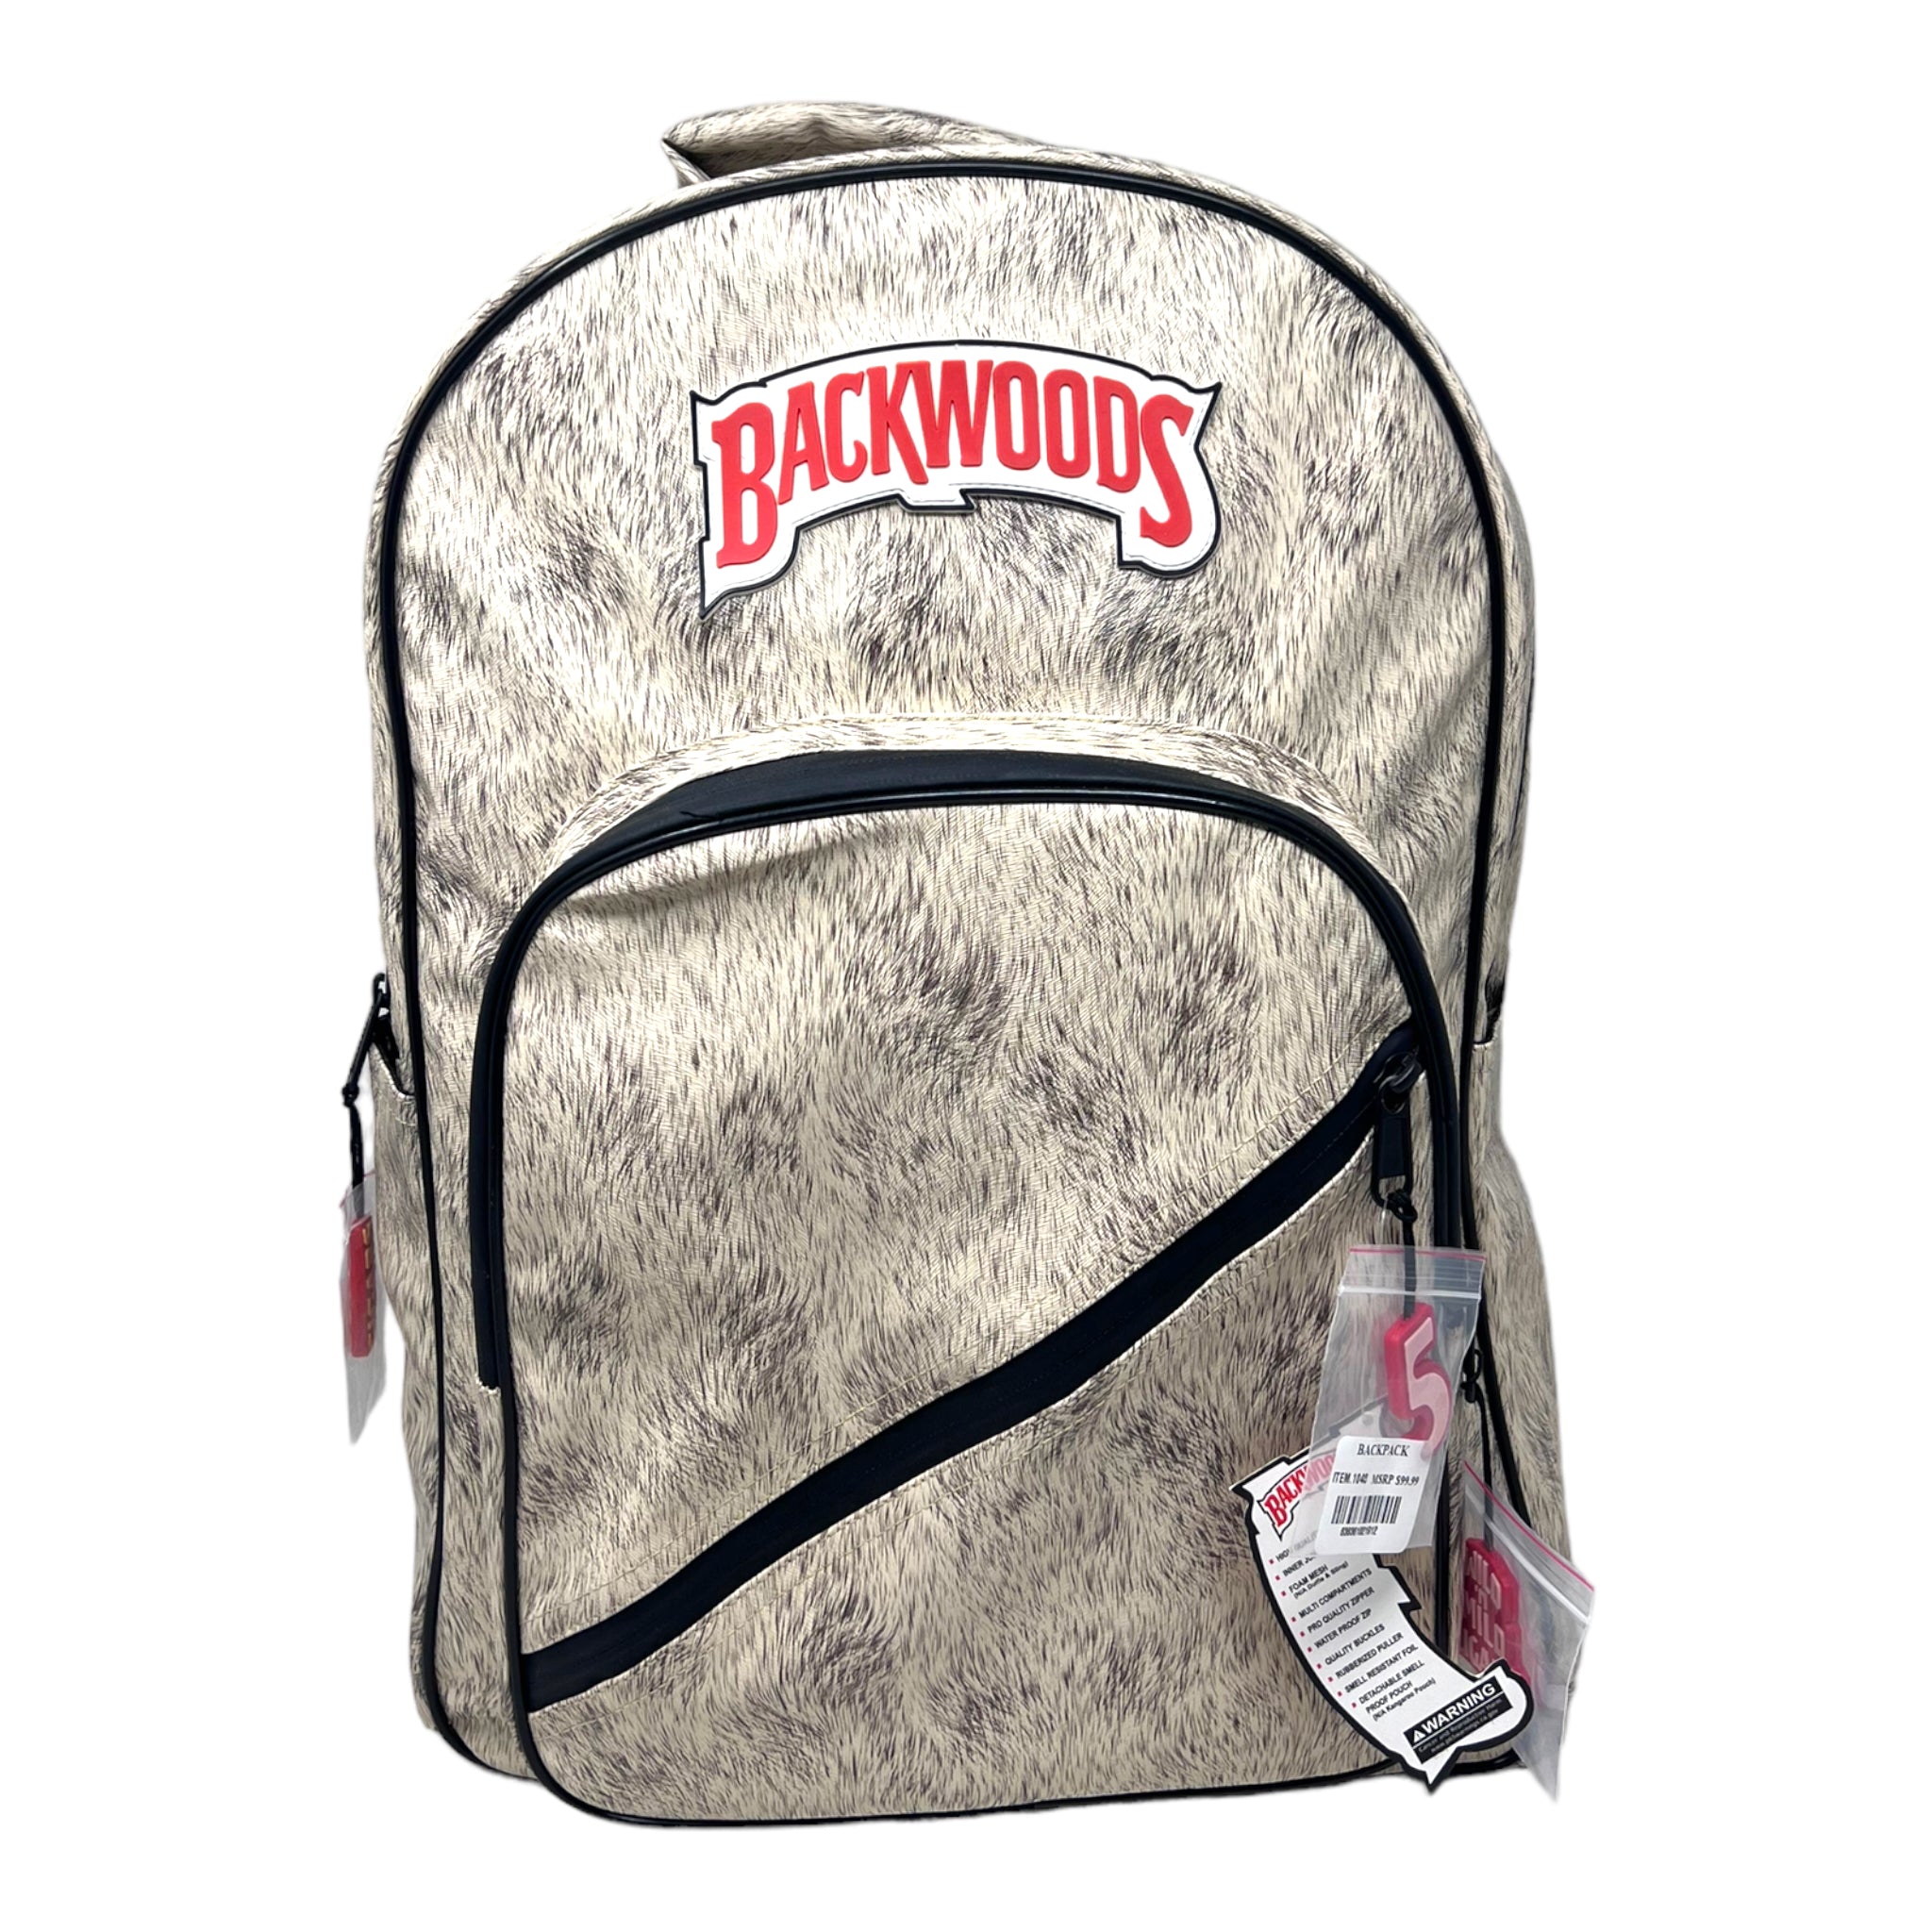 Leather Backwoods Backpacks